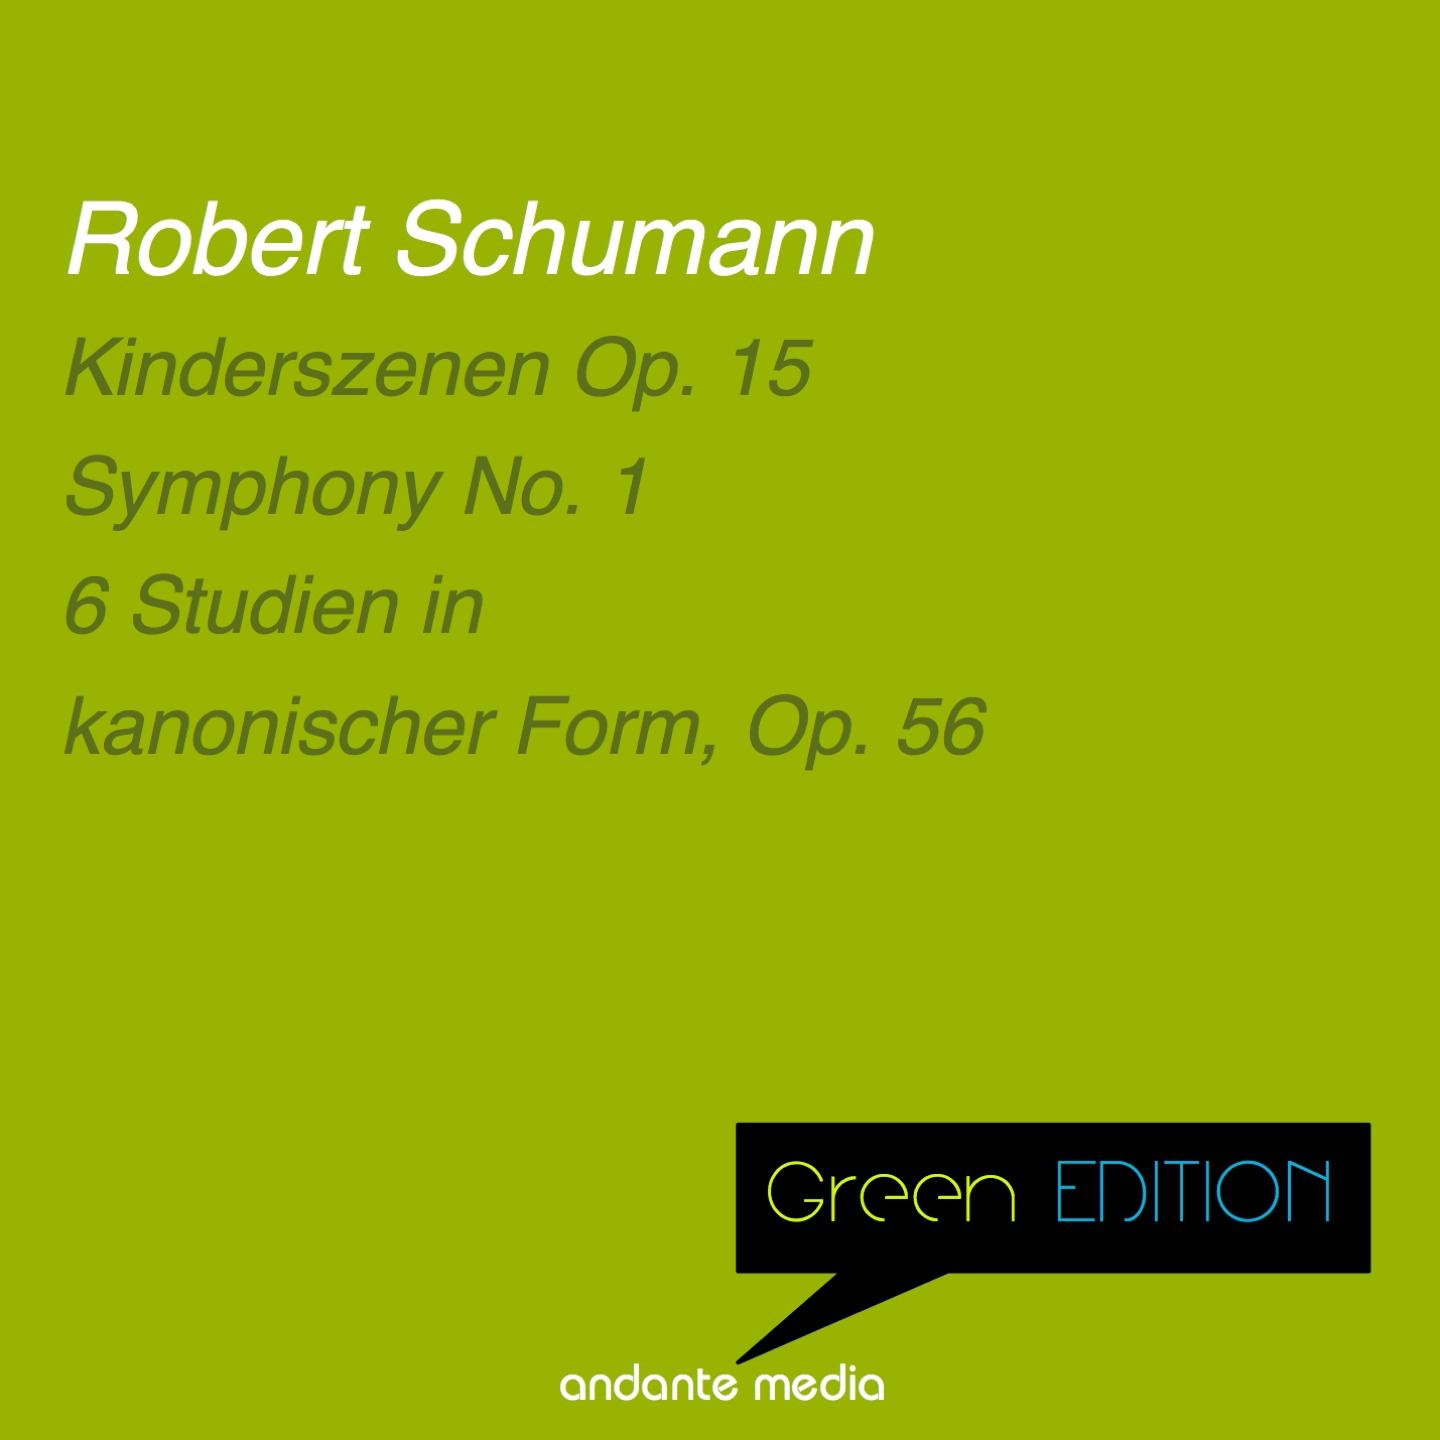 Green Edition - Schumann: Kinderszenen Op. 15 & 6 Studien in kanonischer Form, Op. 56